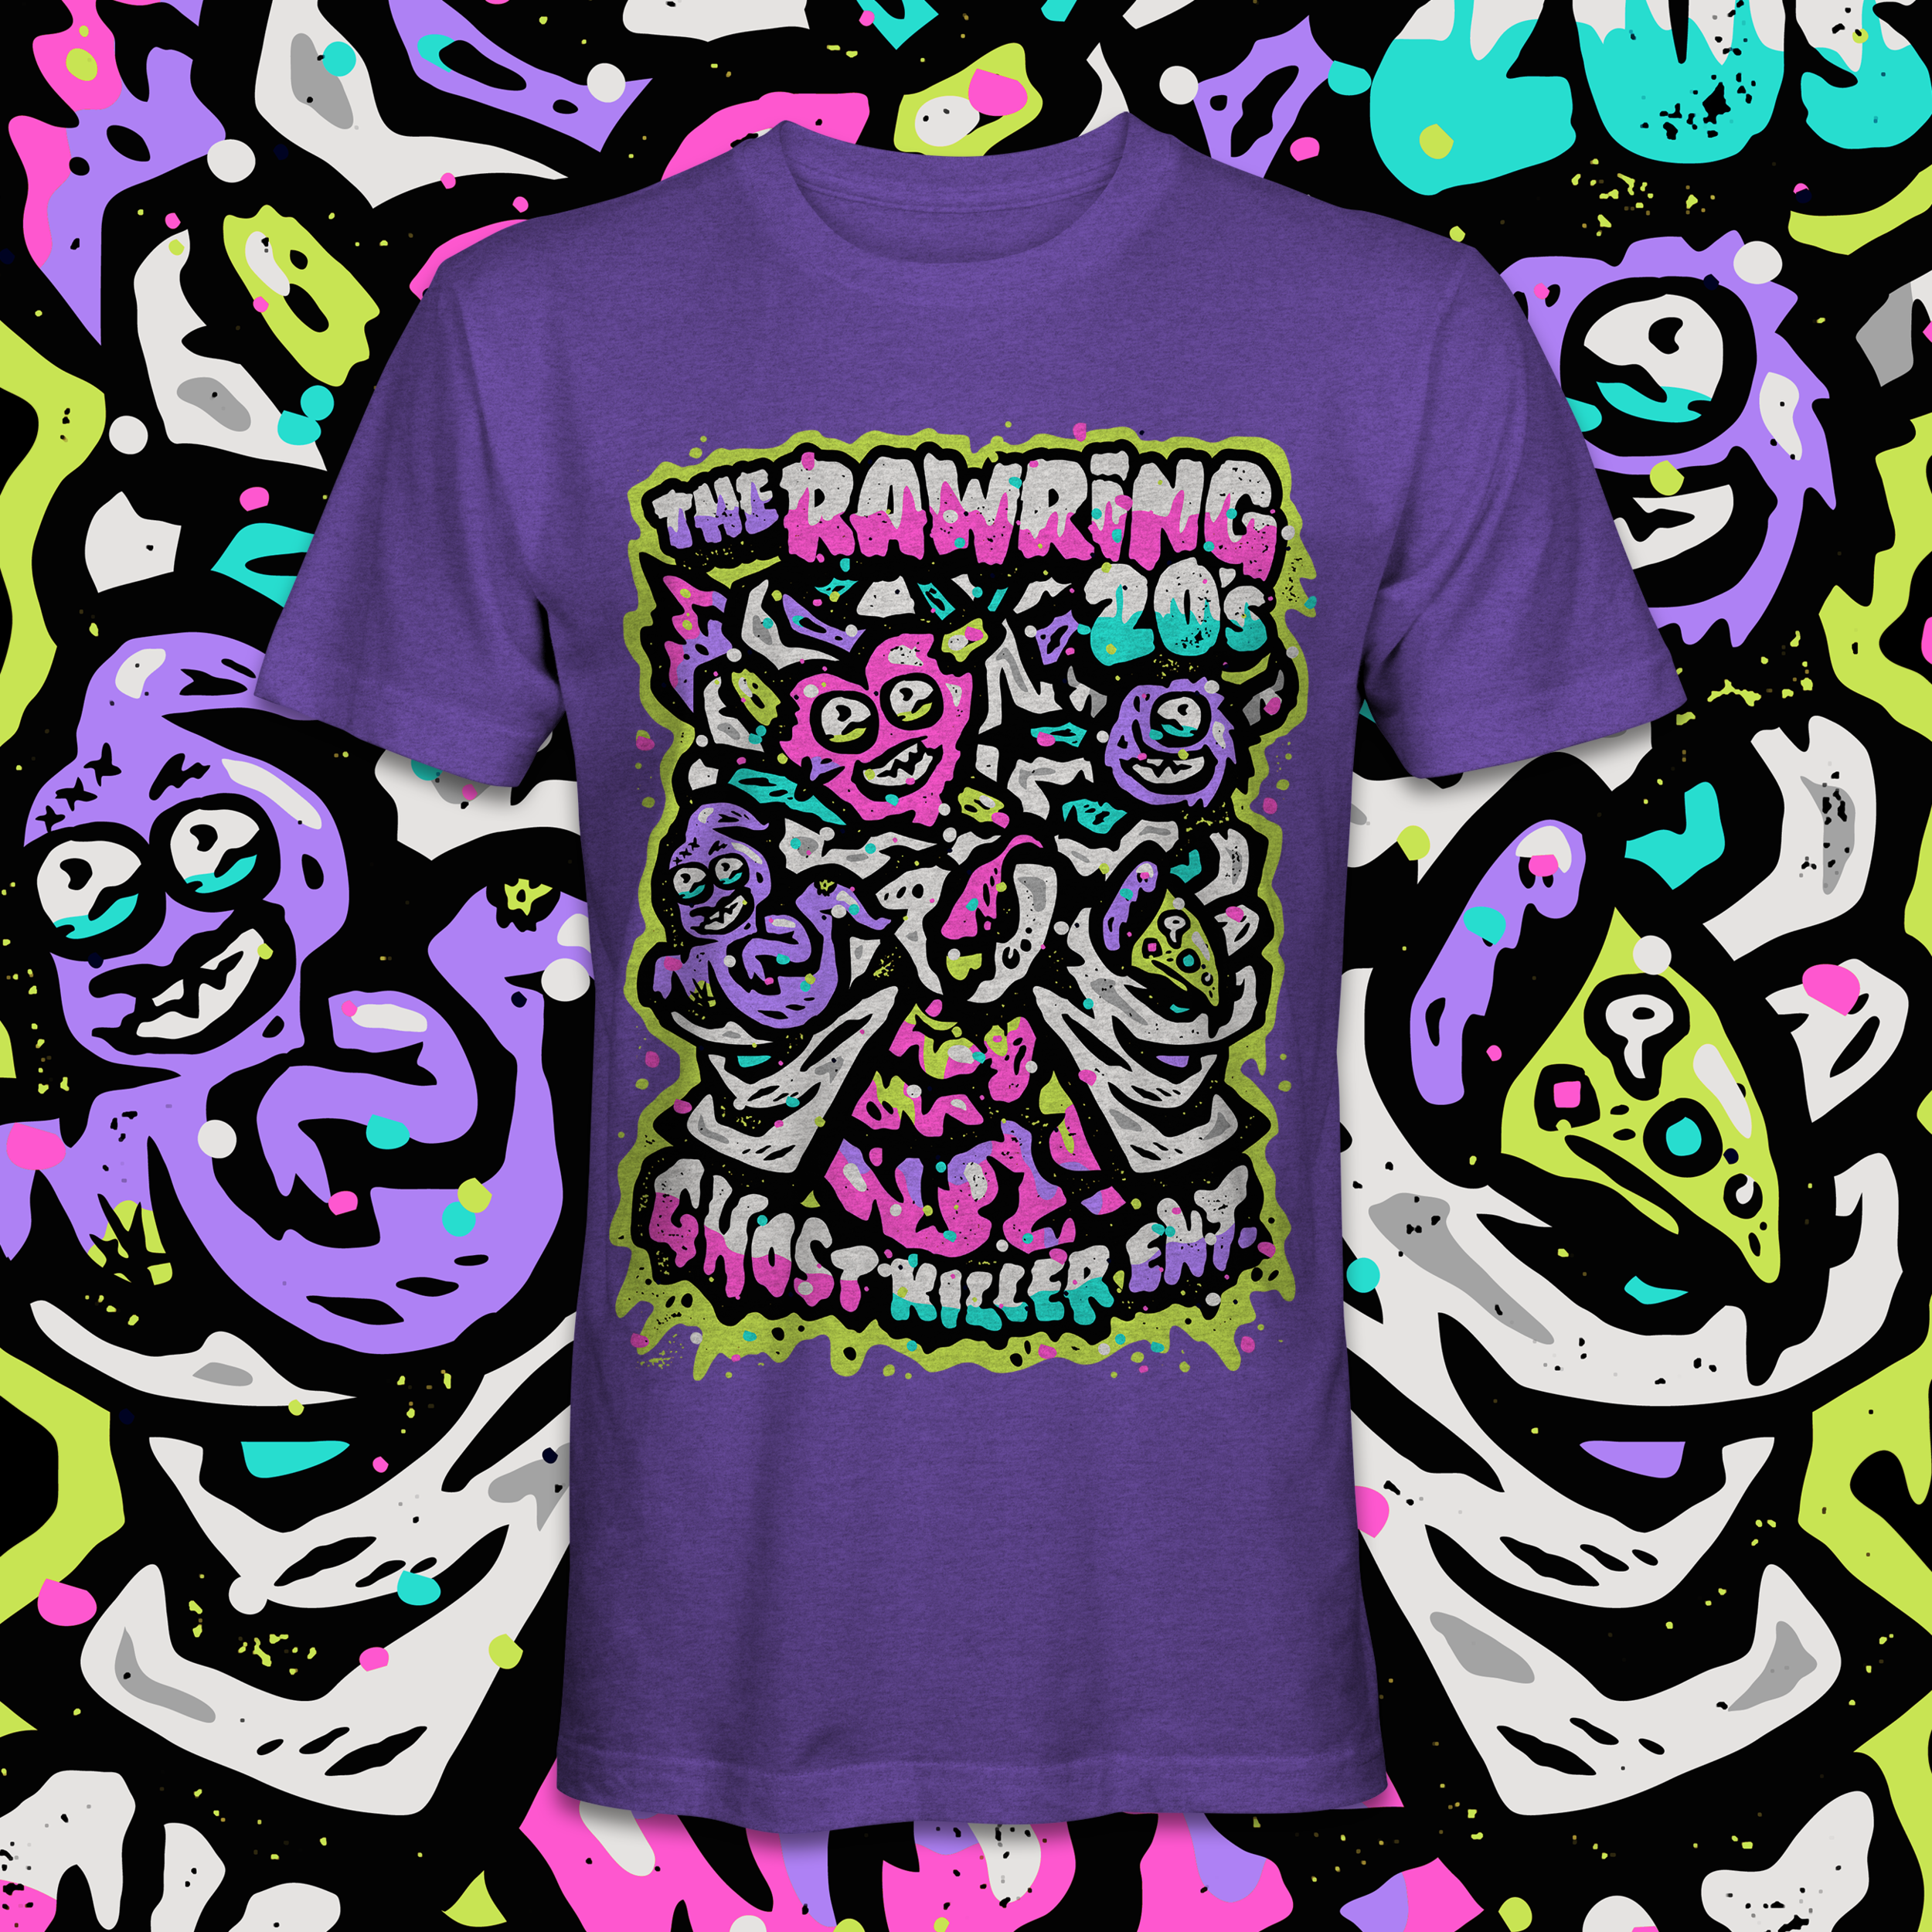 Rawring20s-RIBS-shirt-preview.png